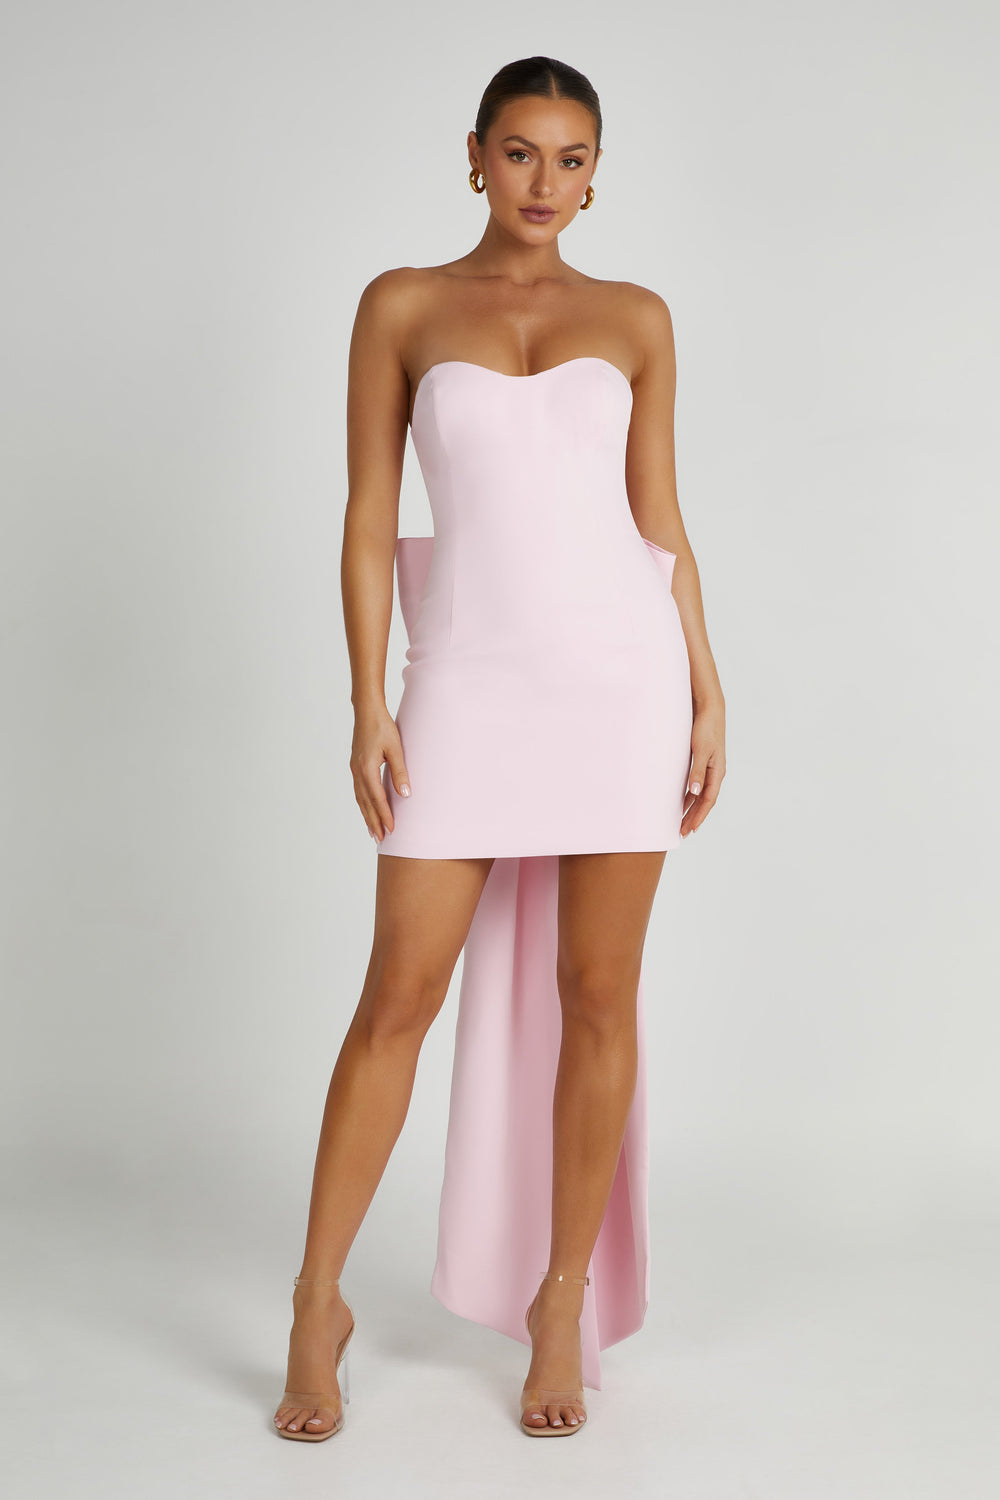 Meredith Strapless Bow Mini Dress - Blush Pink